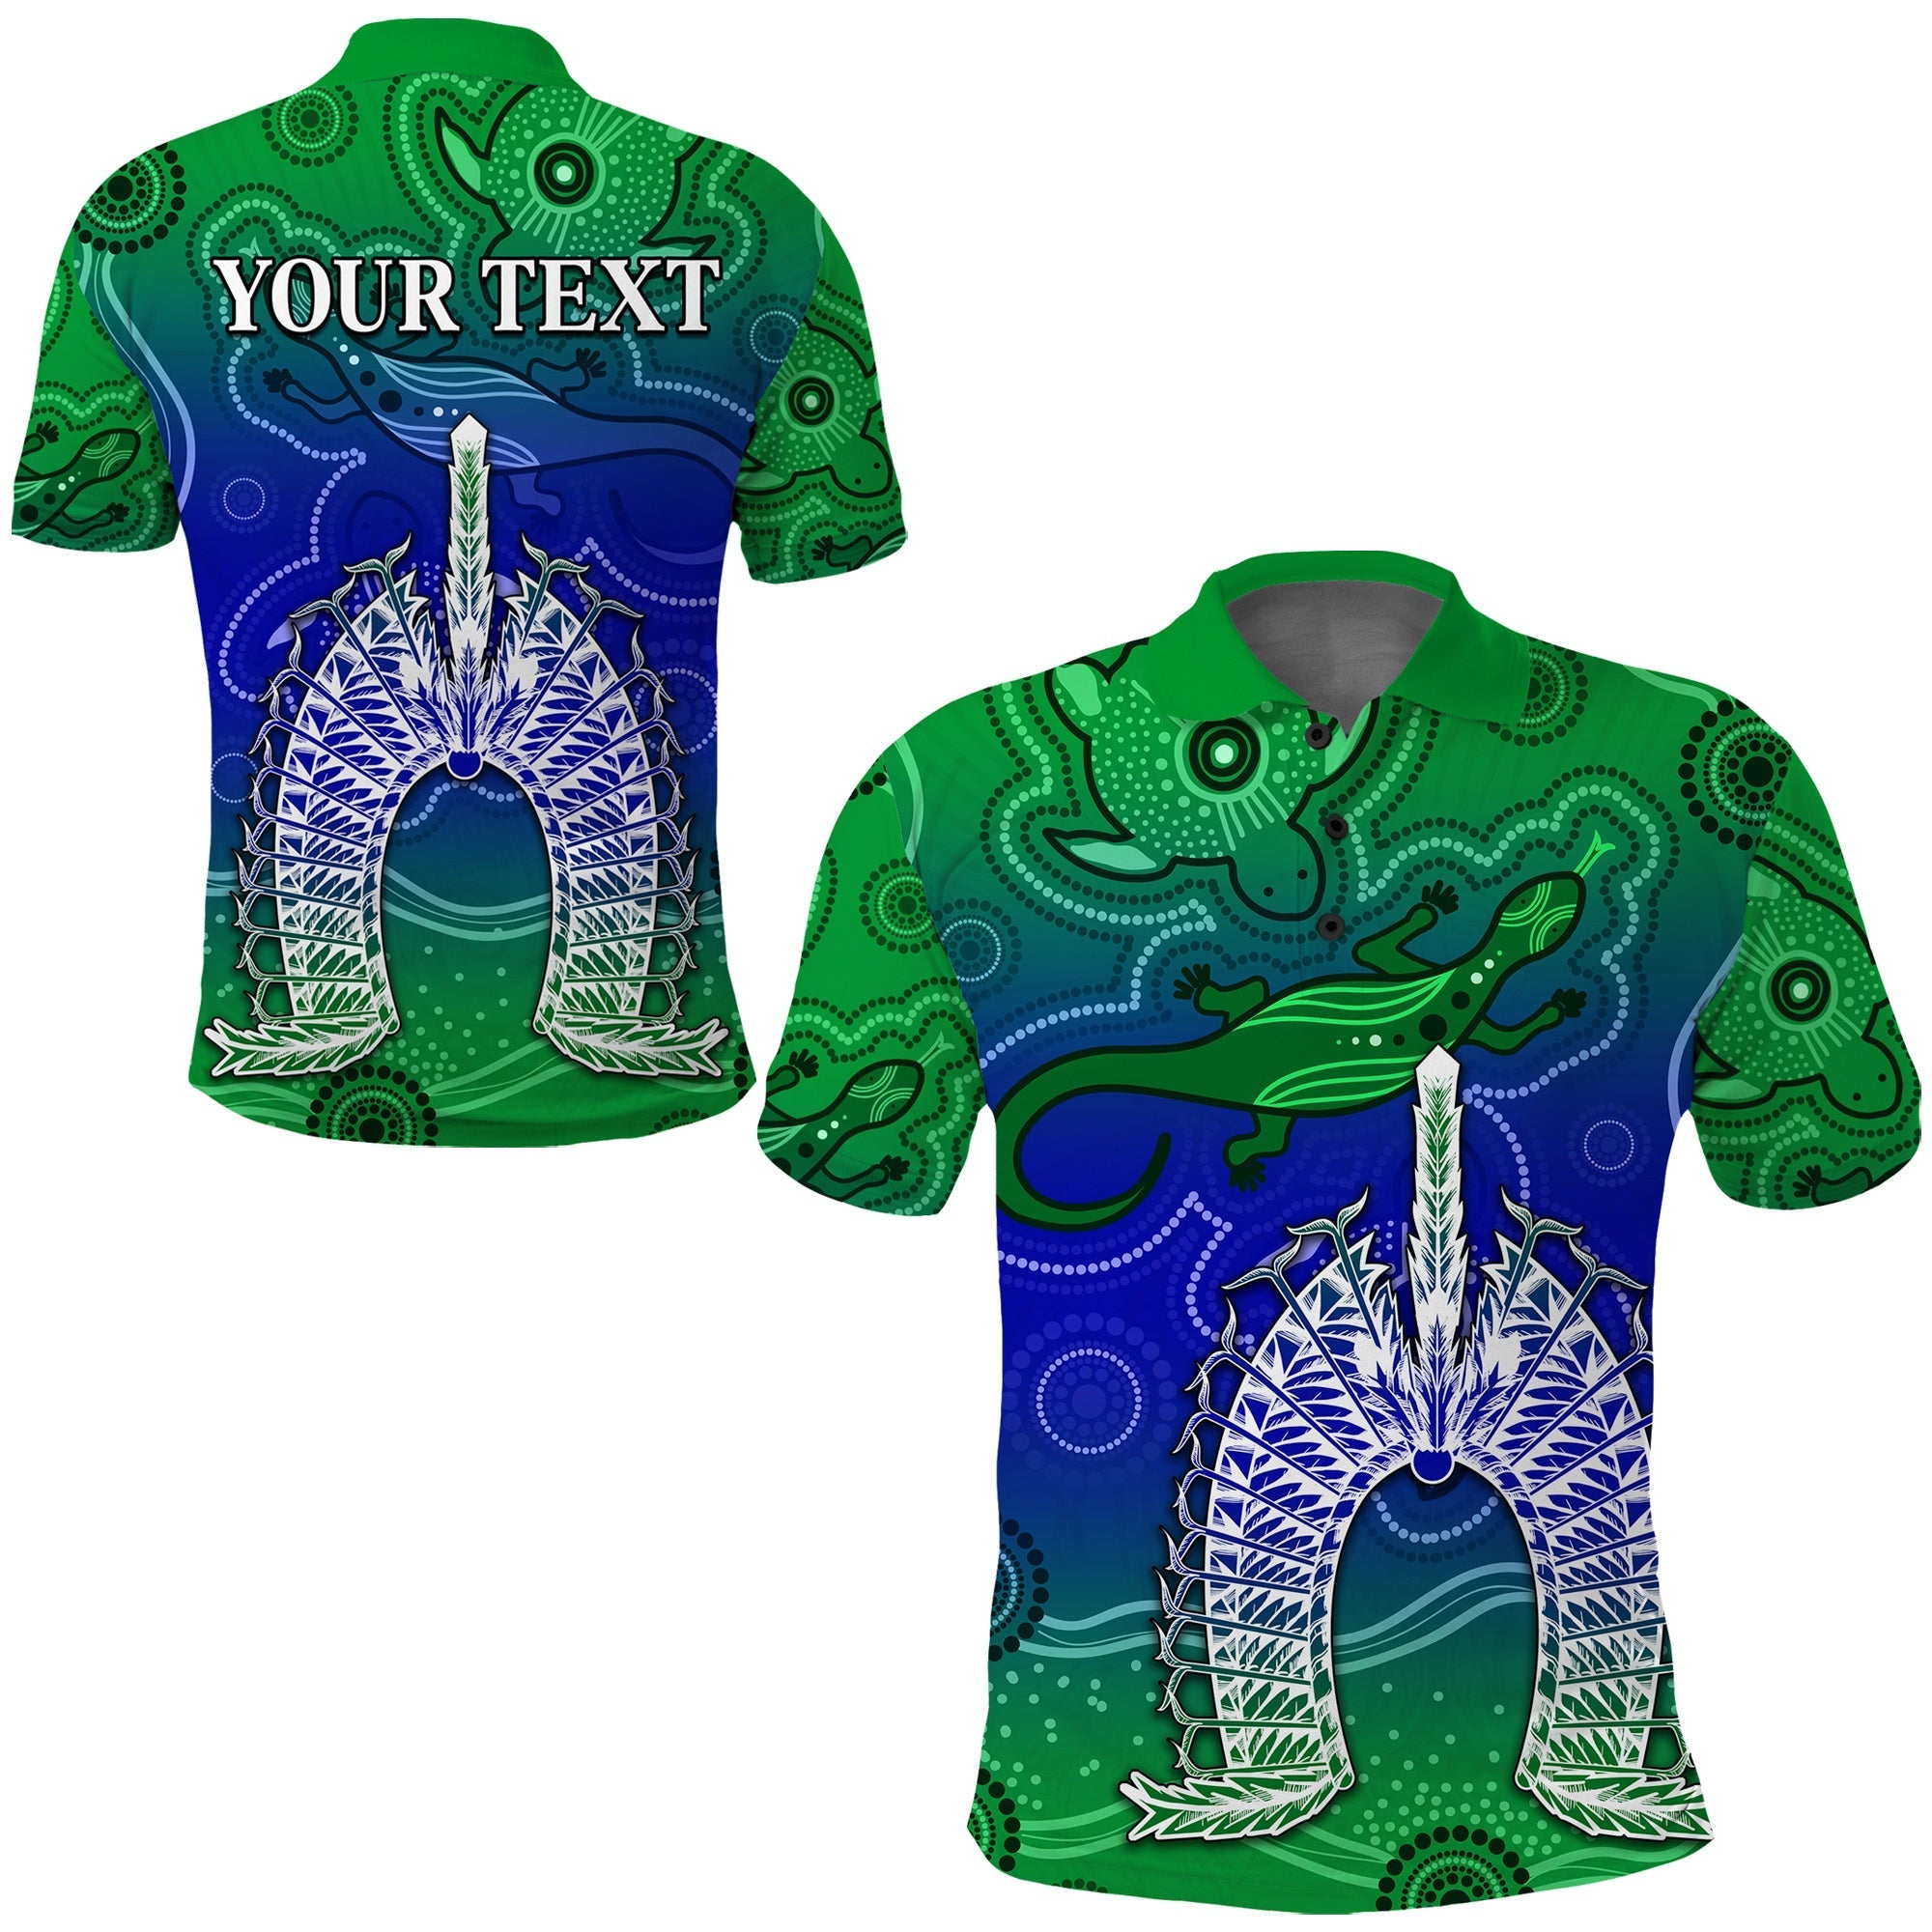 custom-personalised-torres-strait-islands-polo-shirt-aboriginal-art-lizard-symbol-peace-lt13